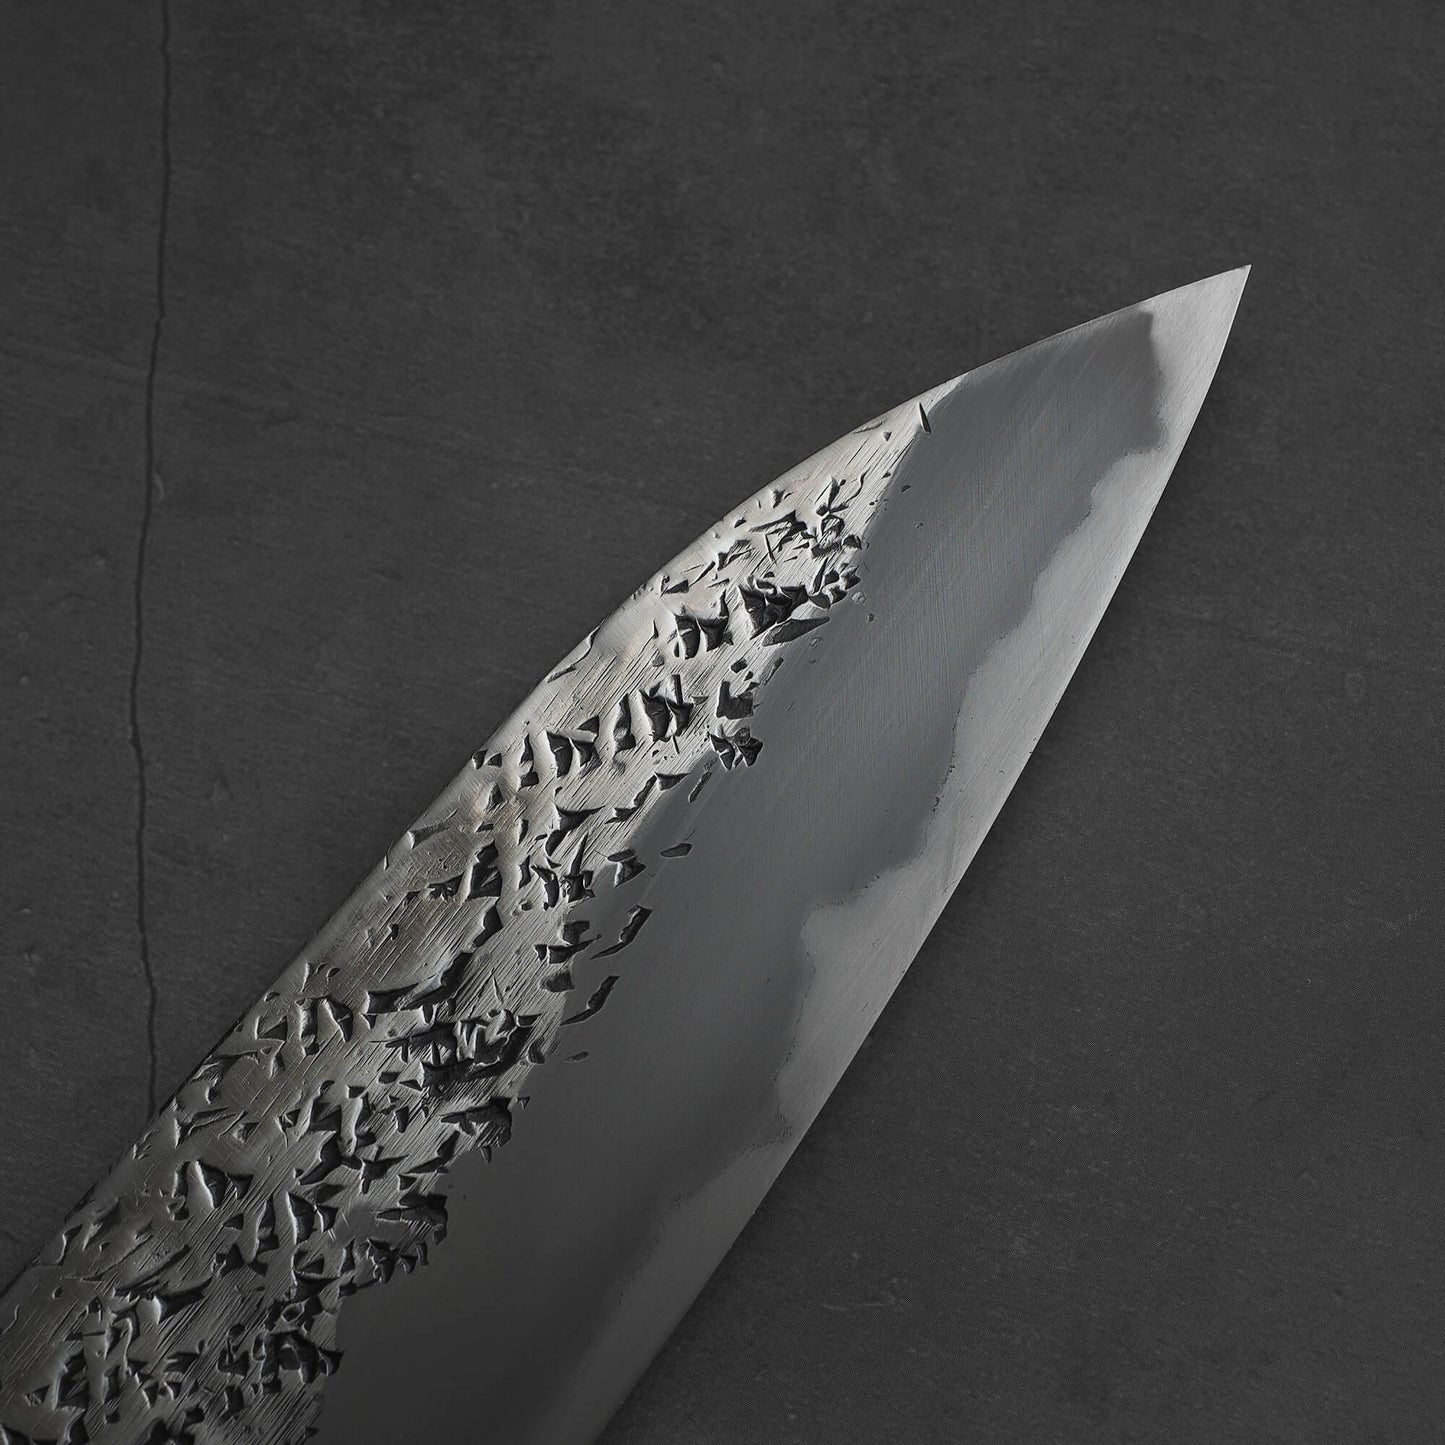 Close up view of 240mm Kisuke Manaka tsuchime honwarikomi shirogami#2 gyuto knife. Image shows the tip area of the right side of the blade